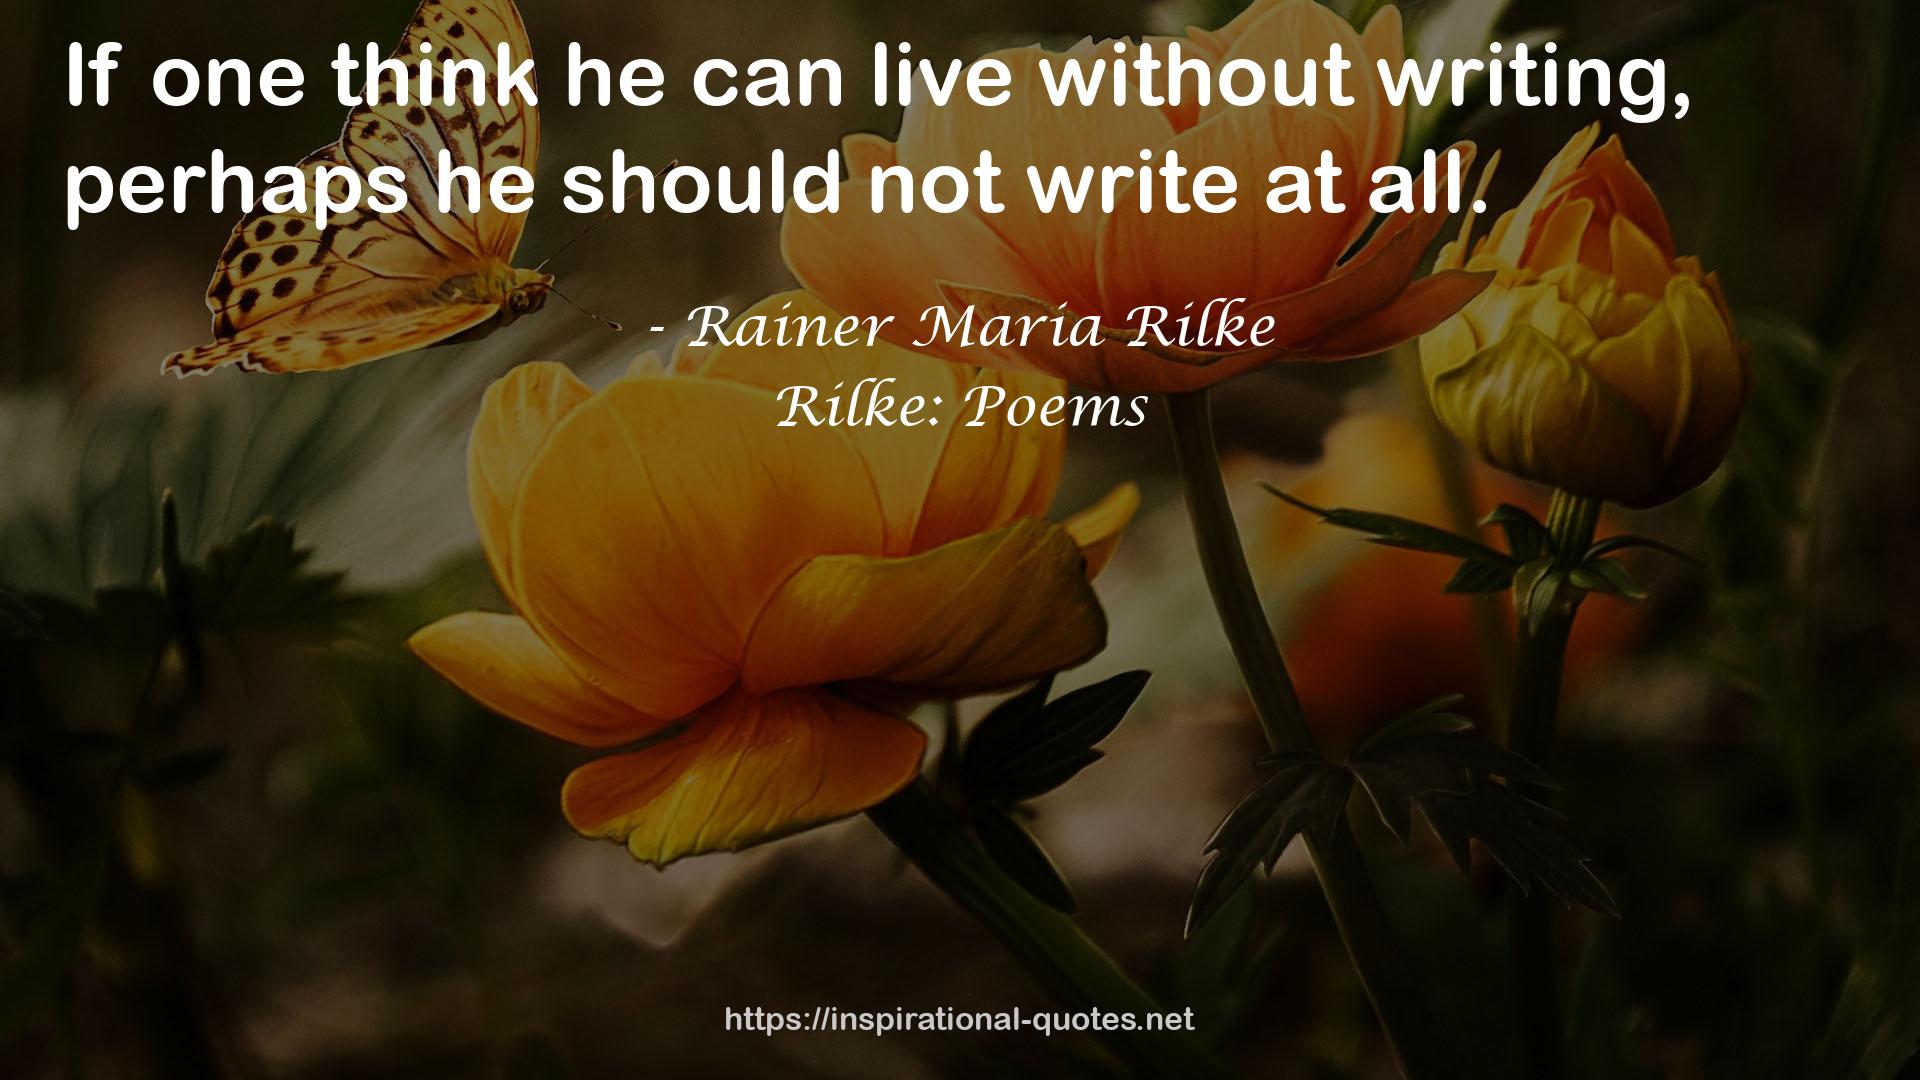 Rilke: Poems QUOTES